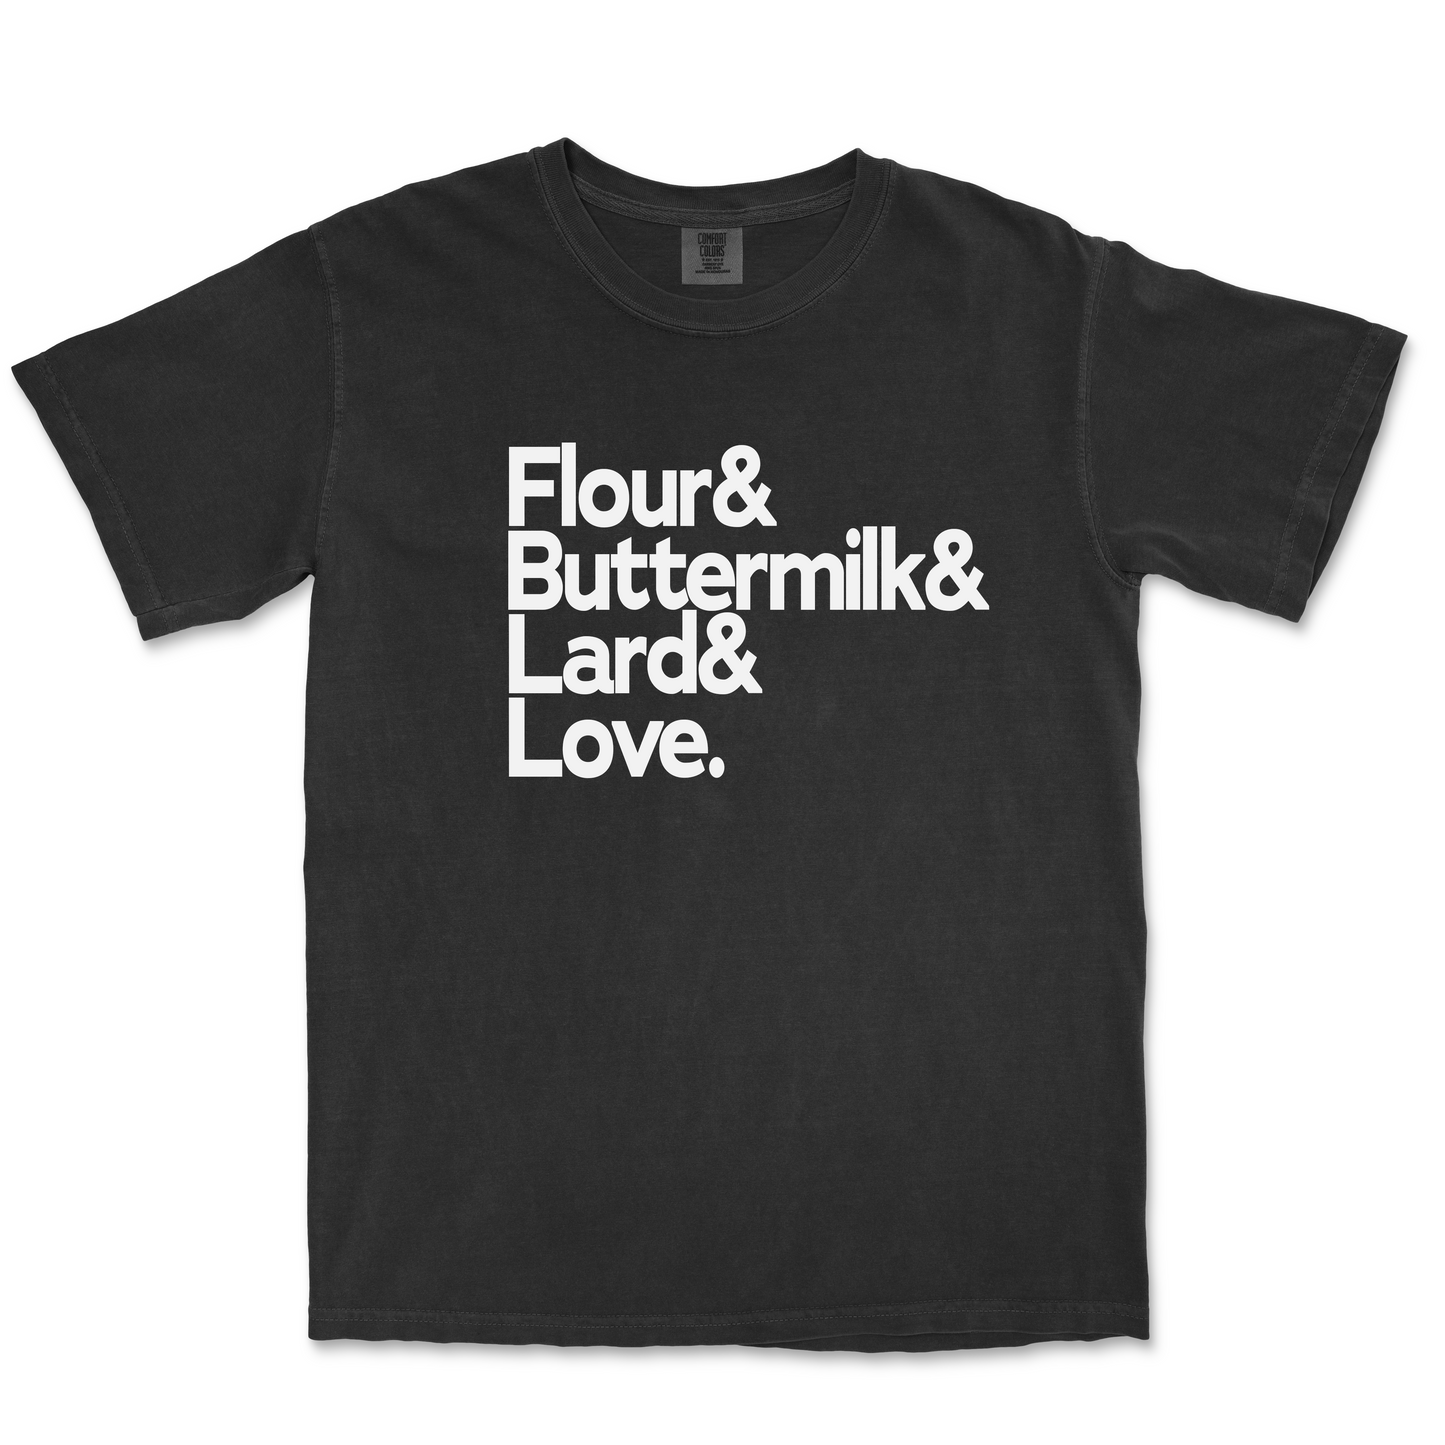 salvation south biscuit shirt flour buttermilk lard love tshirt t-shirt